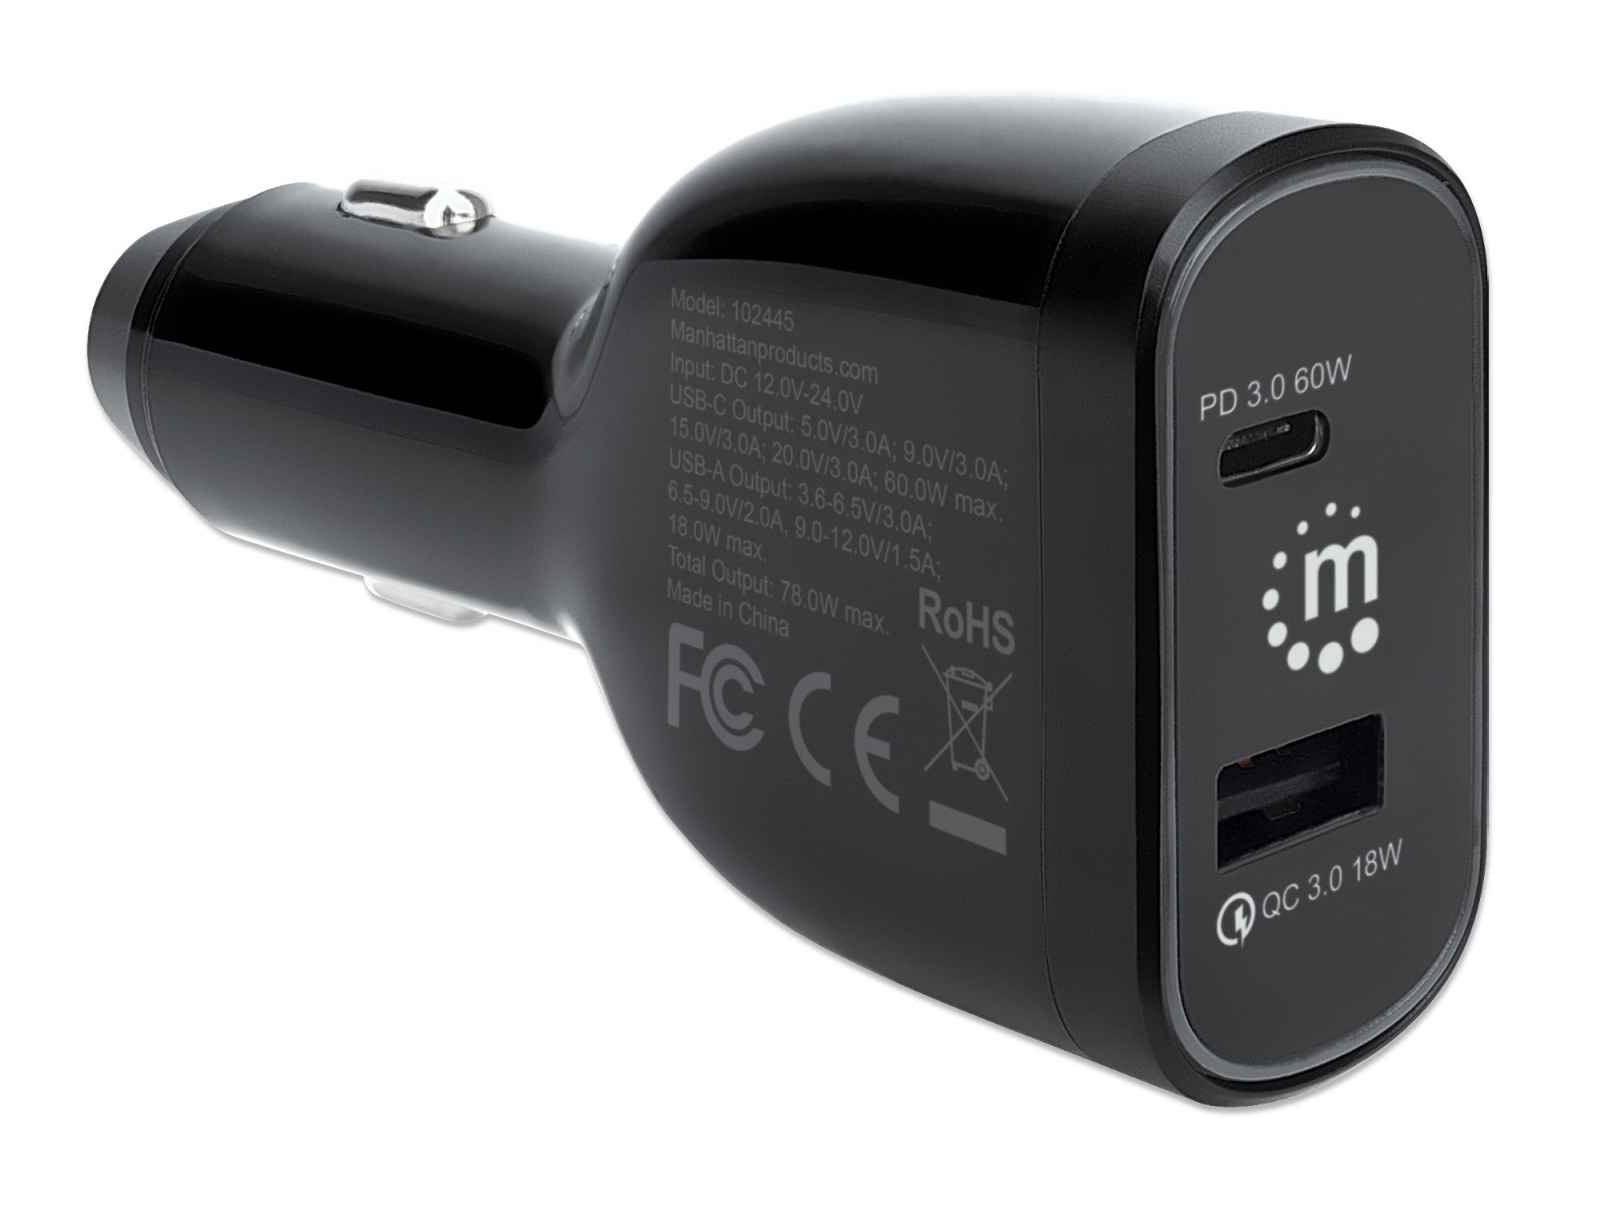  Enchufe de cargador de coche USB C, salida USB de 12 V con  puertos PD duales de 18 W y 18 W QC 3.0 de carga rápida, adaptador de coche  USB